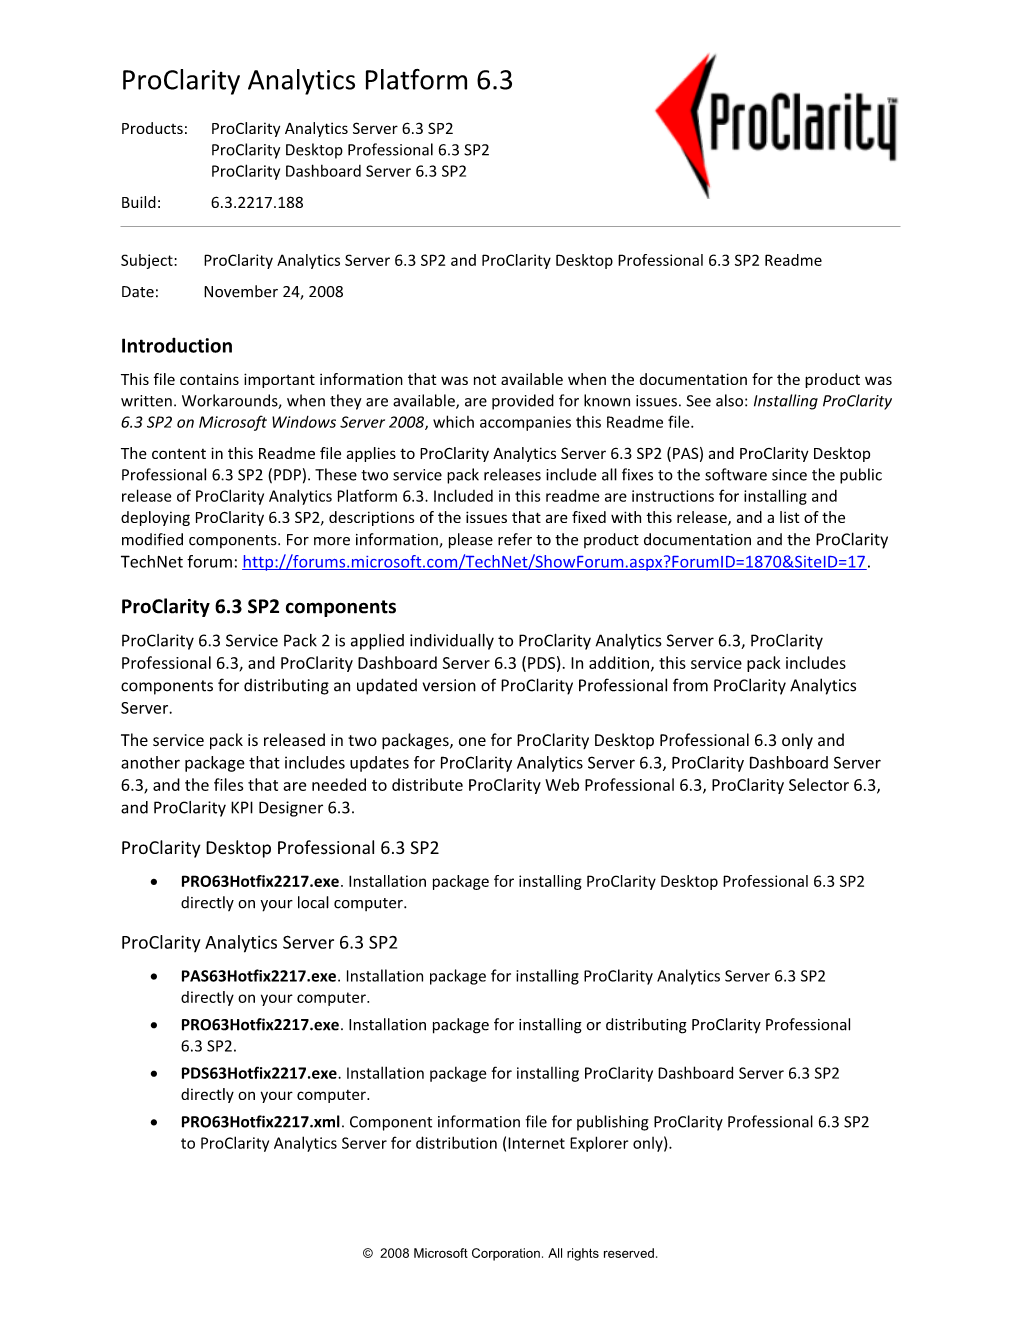 Subject: Proclarity Analytics Server 6.3 SP2 and Proclarity Desktop Professional 6.3 SP2 Readme